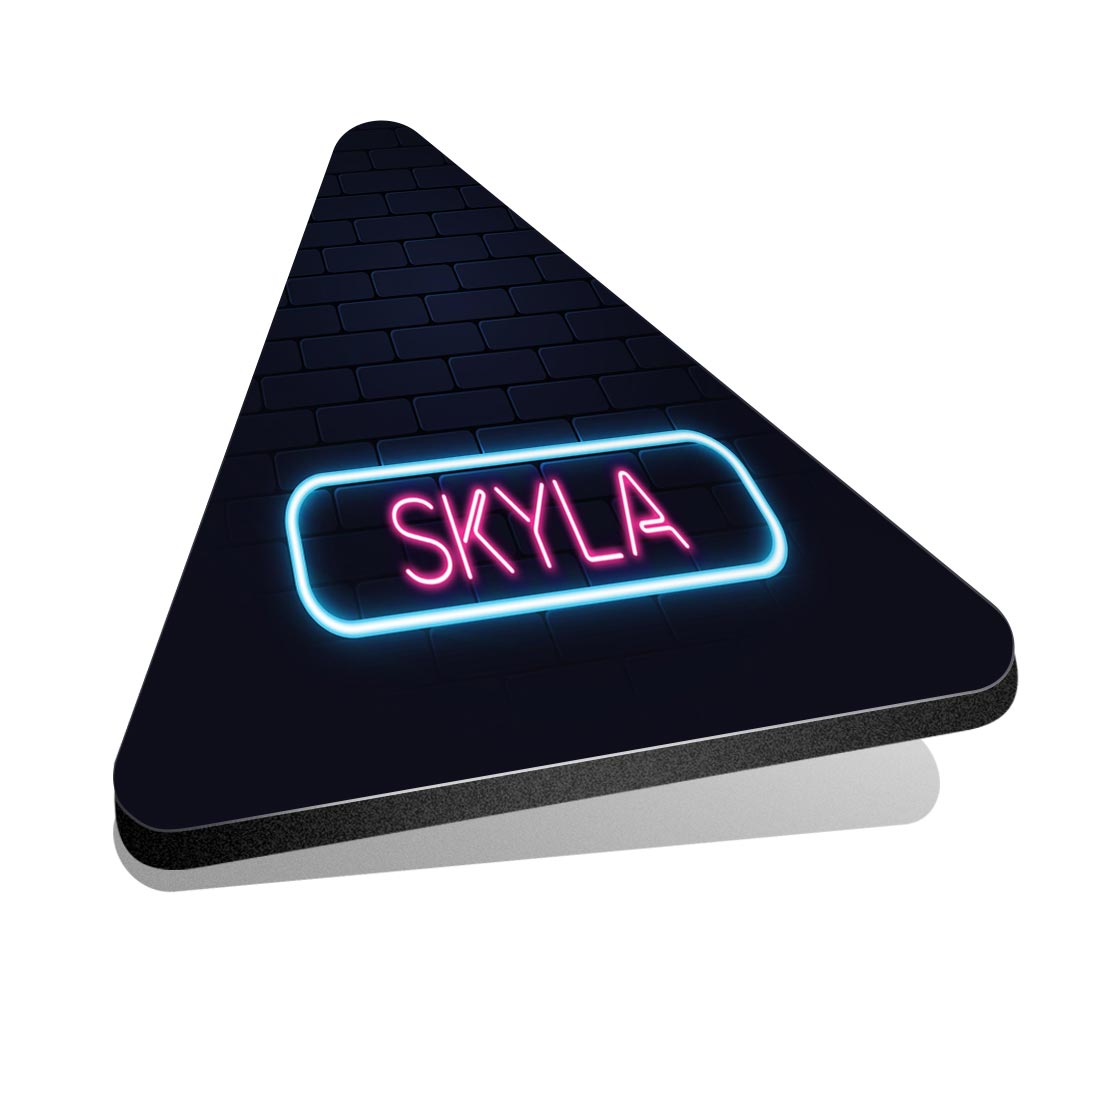 1x Triangle Fridge MDF Magnet Neon Sign Design Skyla Name #353510 - Picture 1 of 1